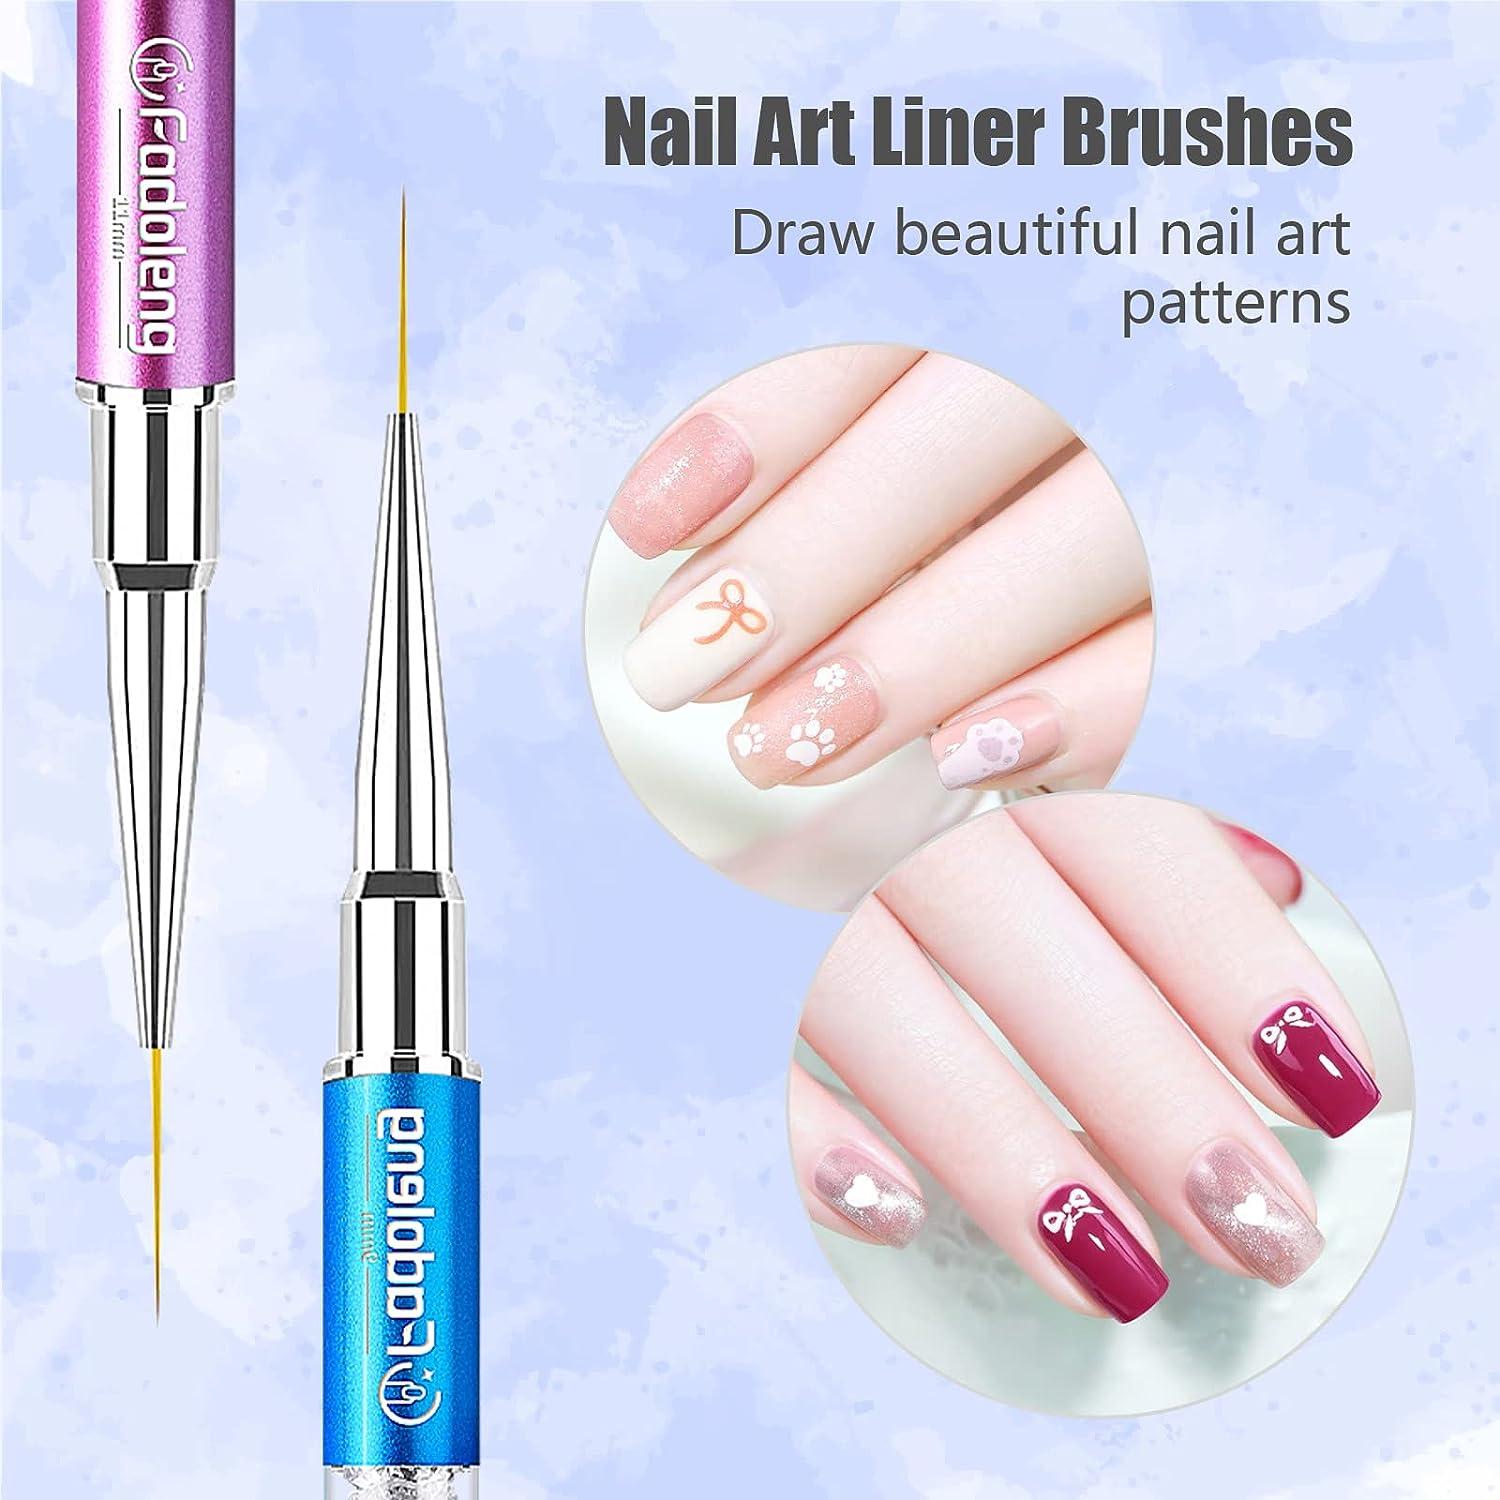 Nail Art Liner Brushes for Nail Design